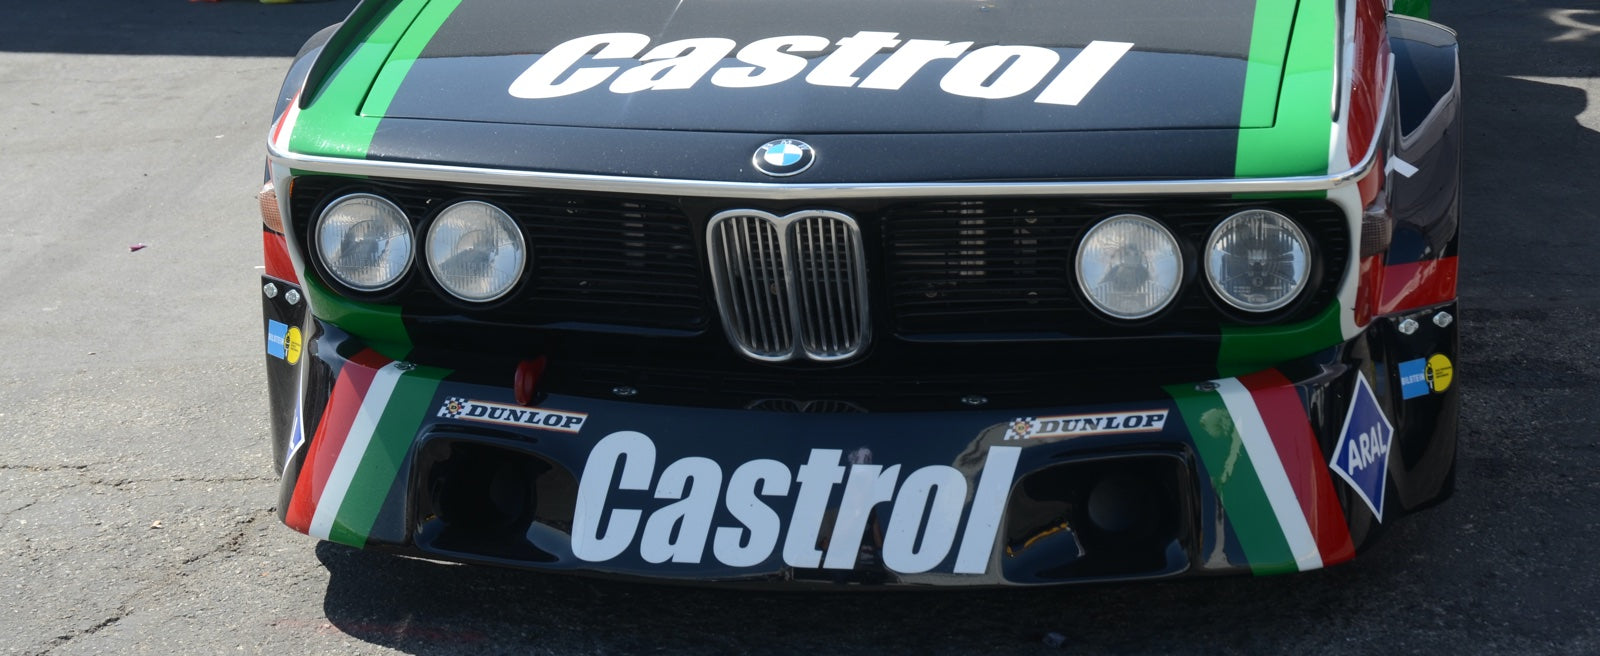 BMW Returns to Castrol for Automotive Oils